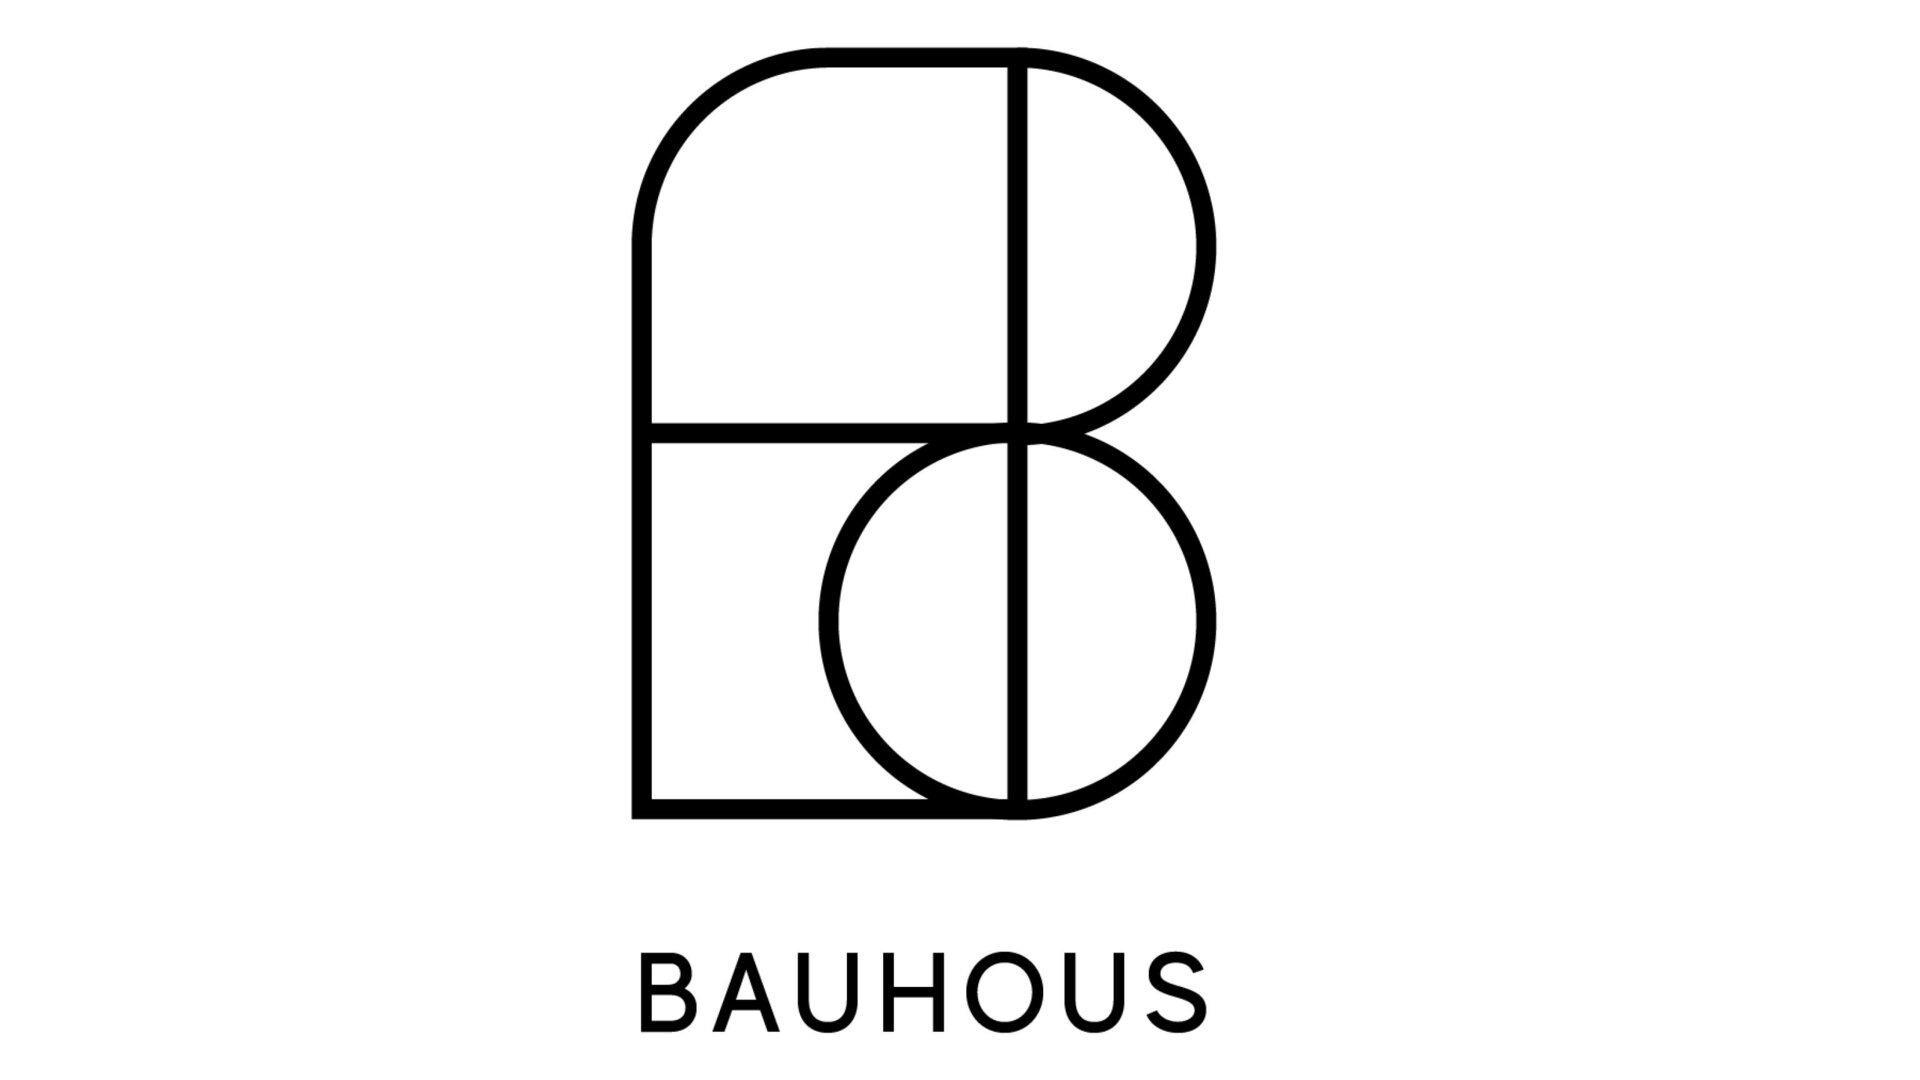 Bauhous - Logo